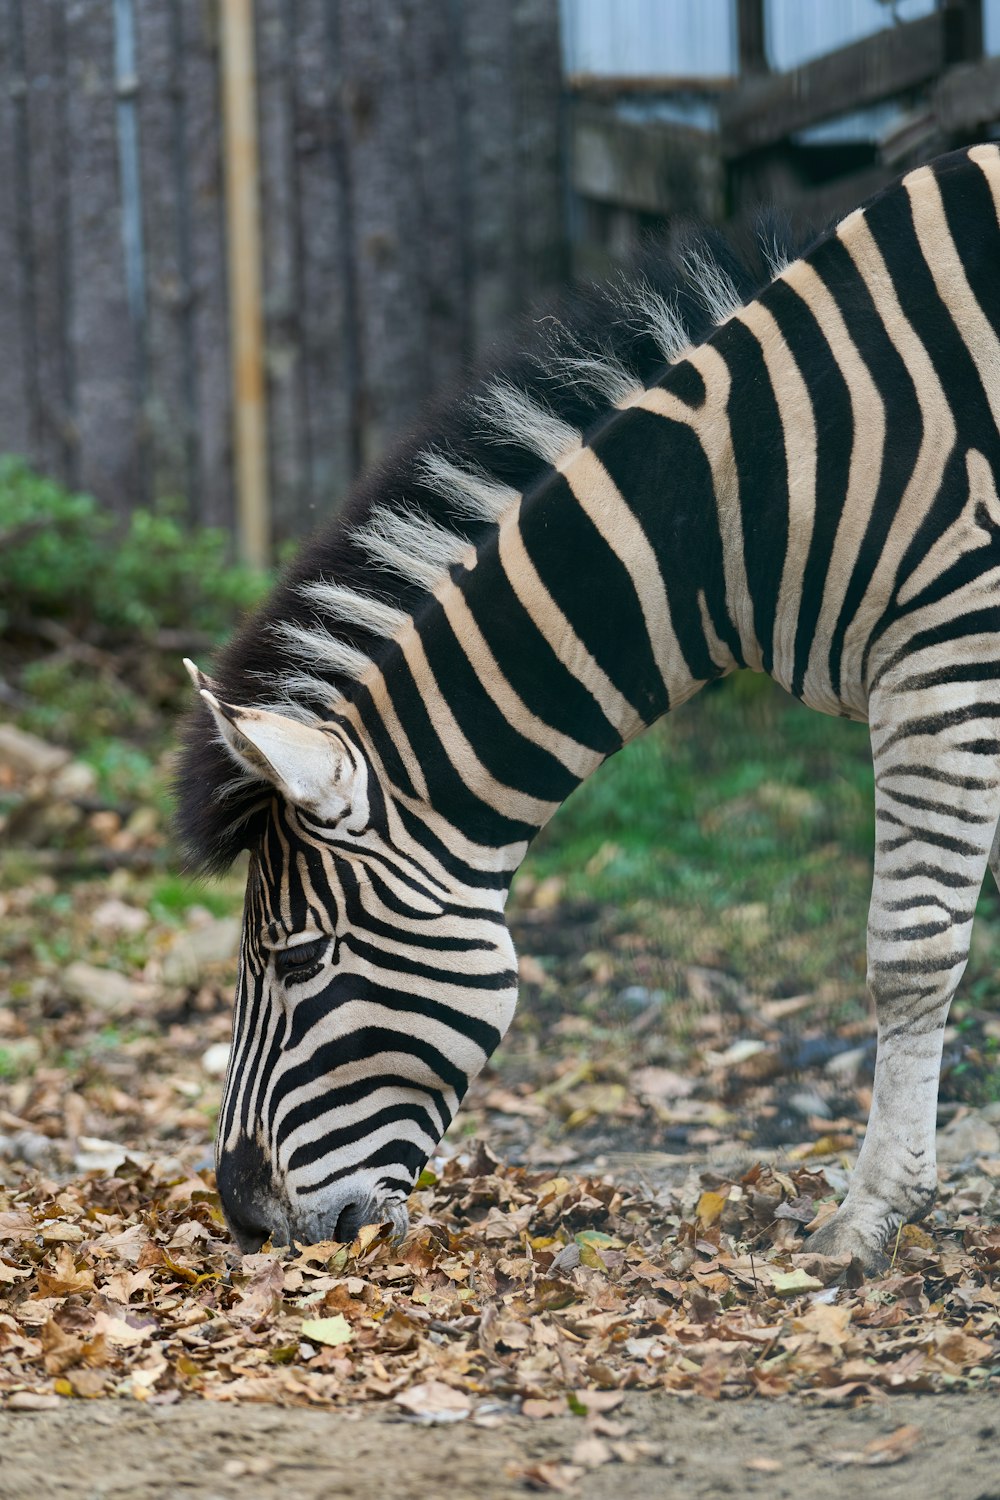 a zebra eating leaves